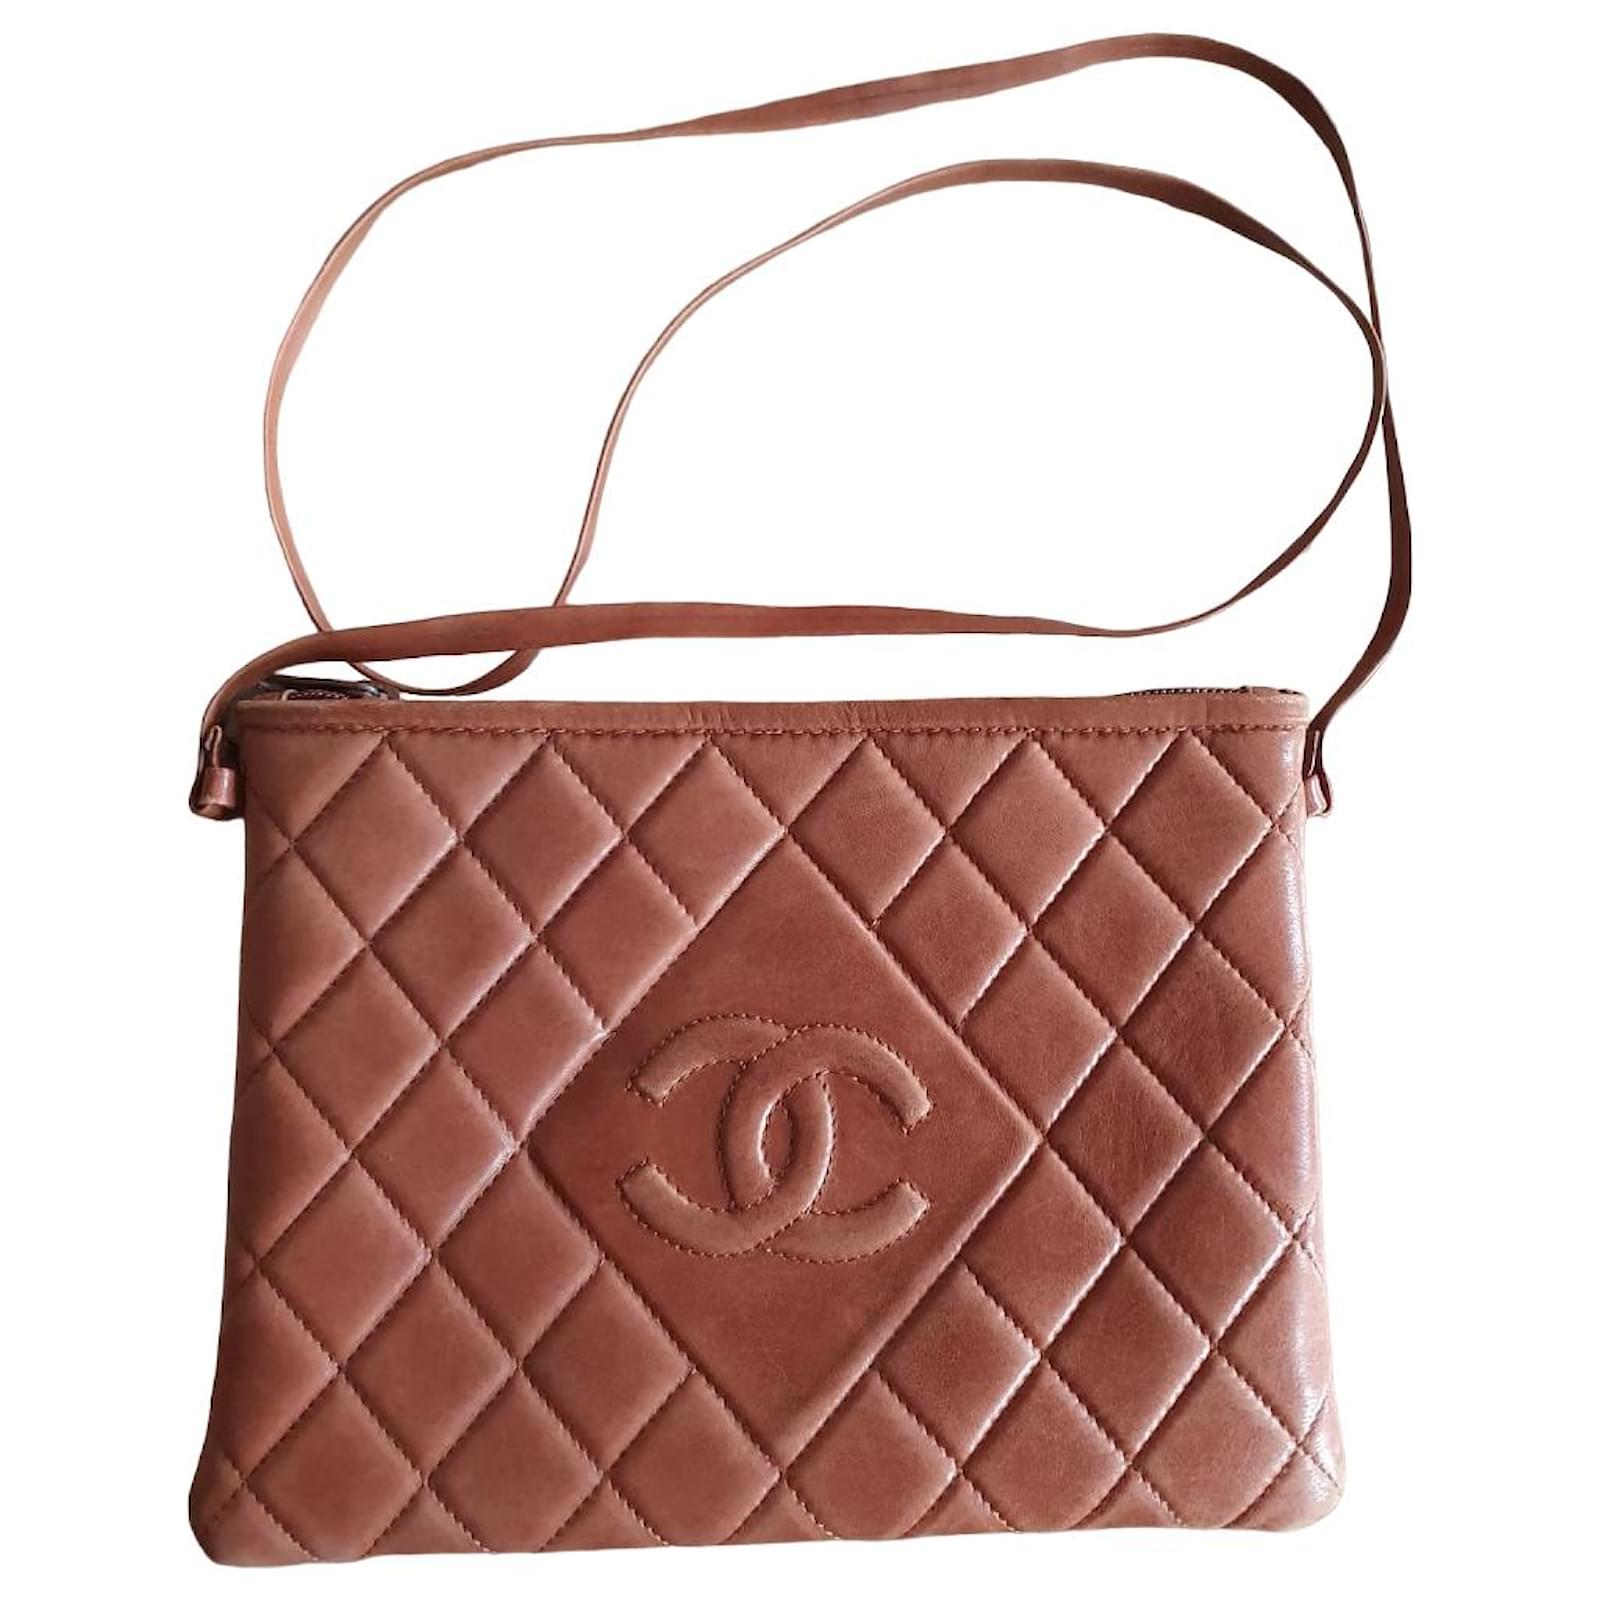 Handbags Chanel Vintage Chanel Shoulder Bag